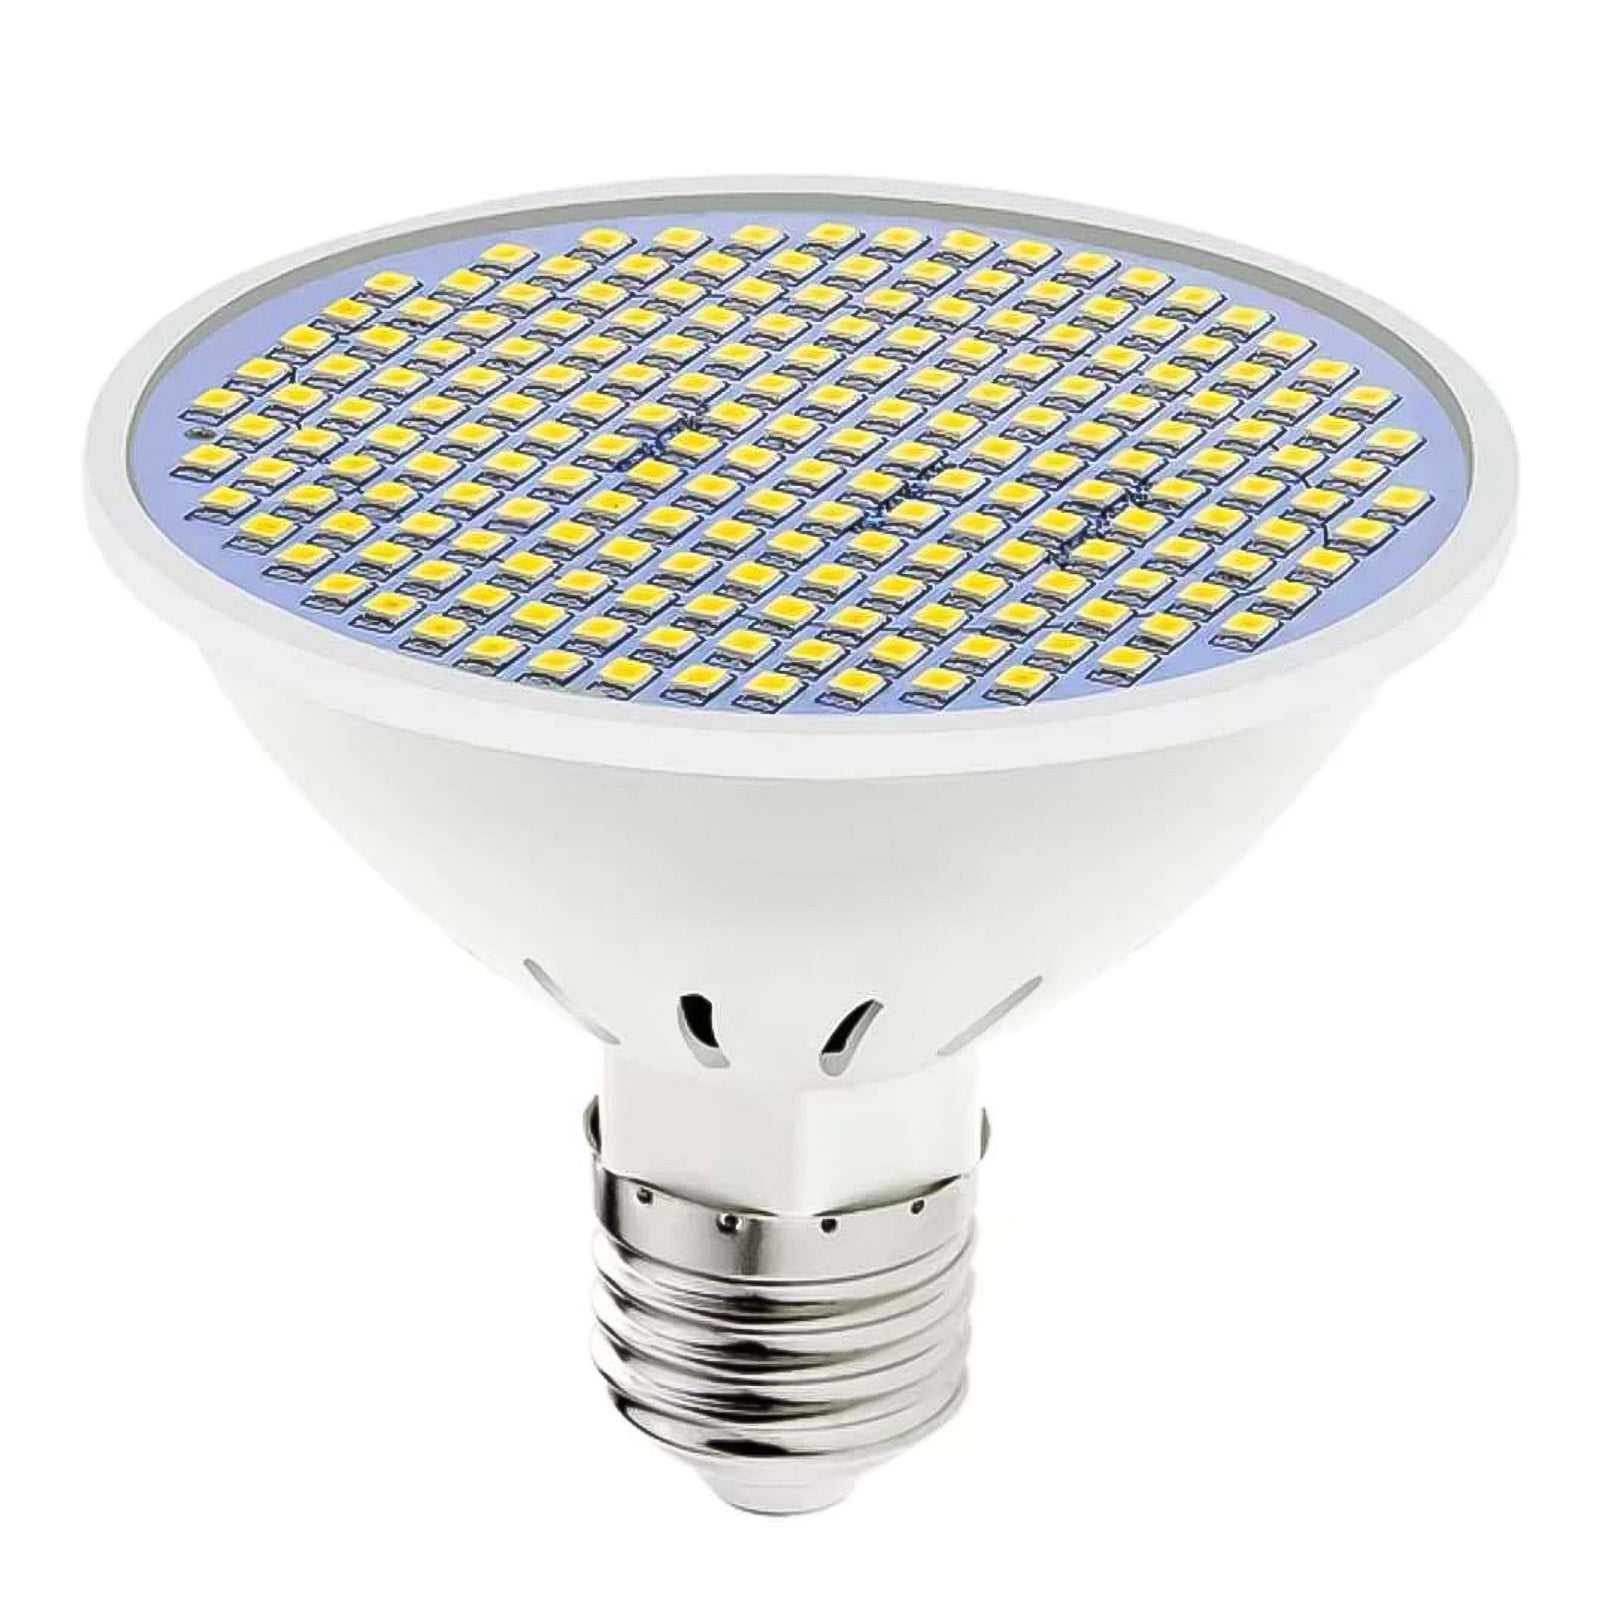 Full Spectrum E27 40W LED Grow Lights Bulbs Lamps for Indoor Plants Hydroponics 